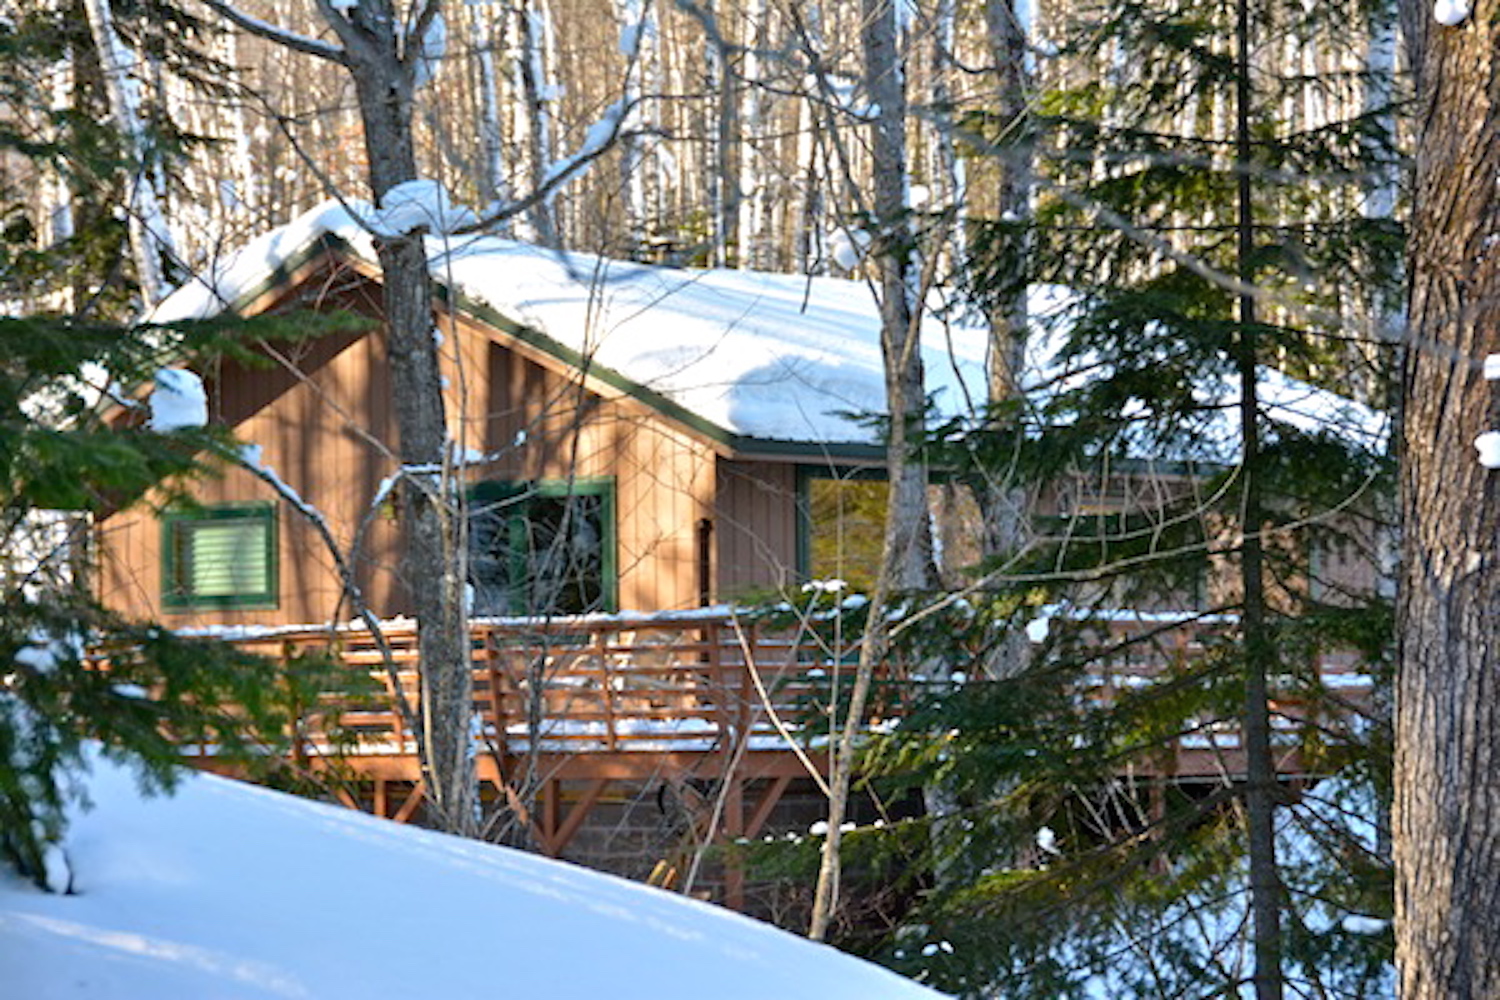  The cabin in winter. 